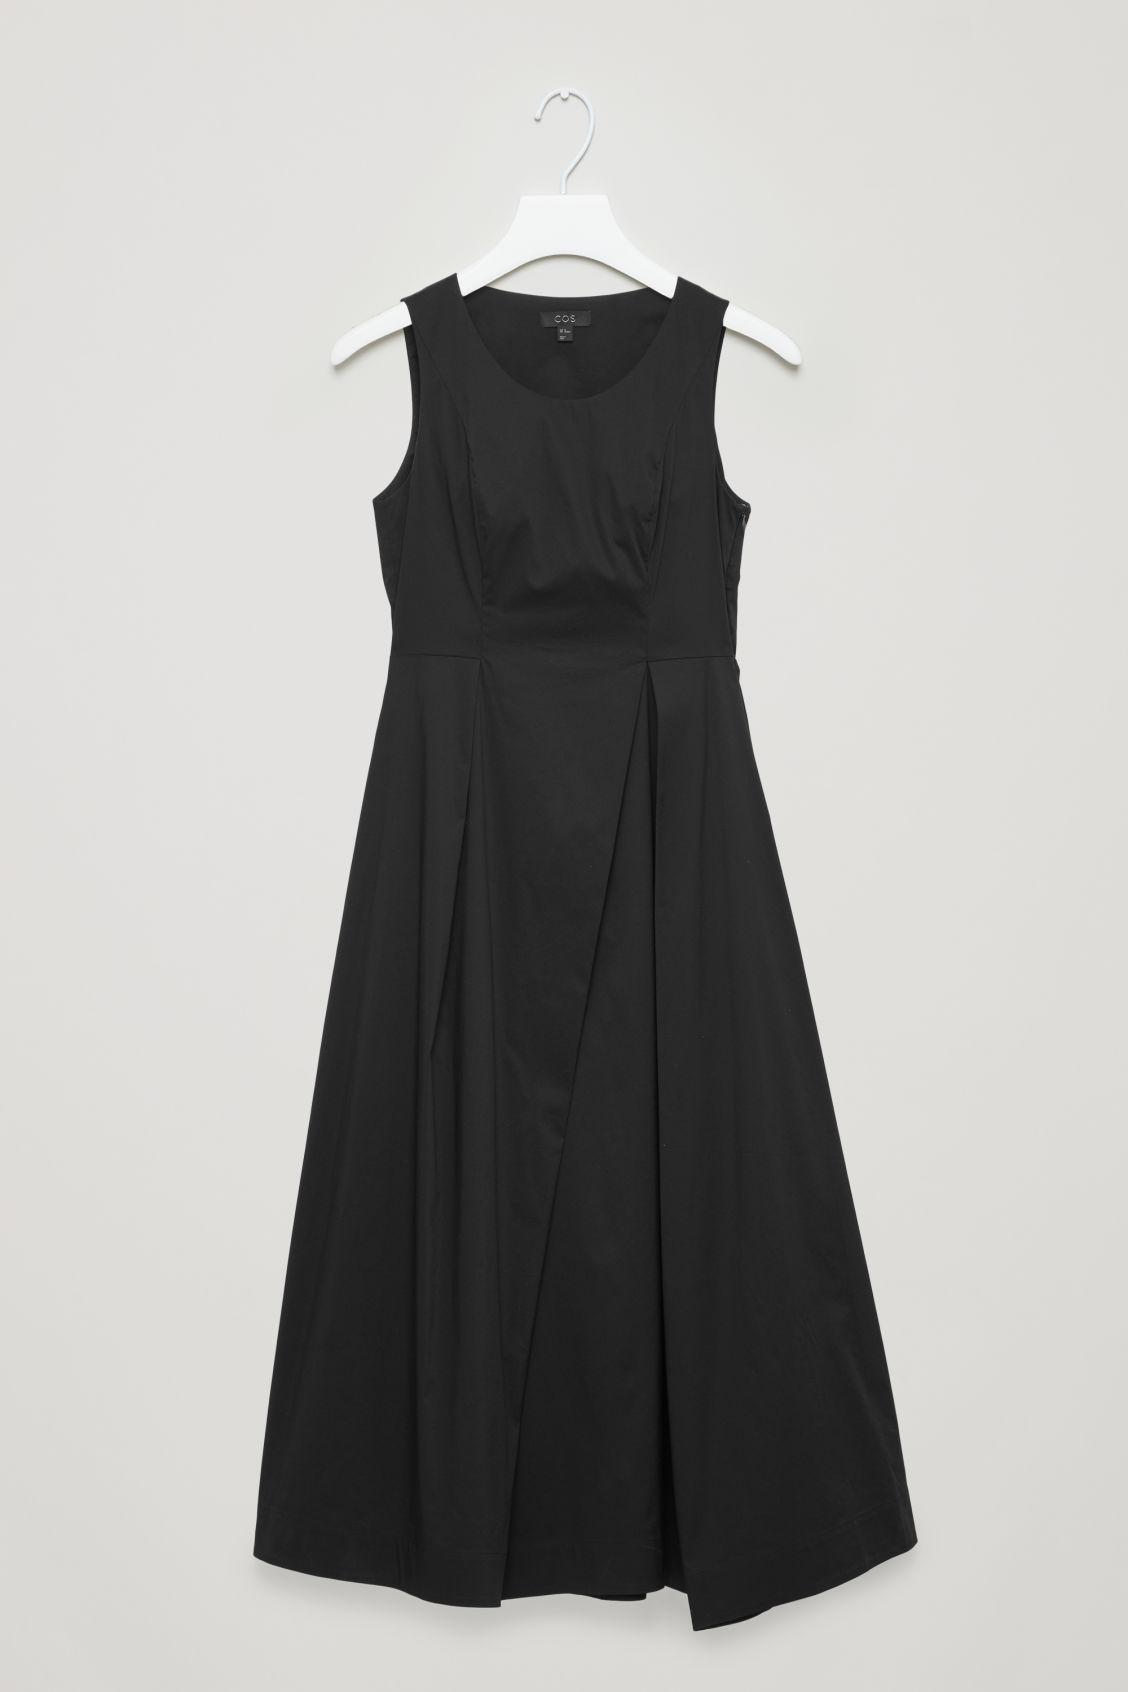 COS Flared Sleeveless Dress in Black